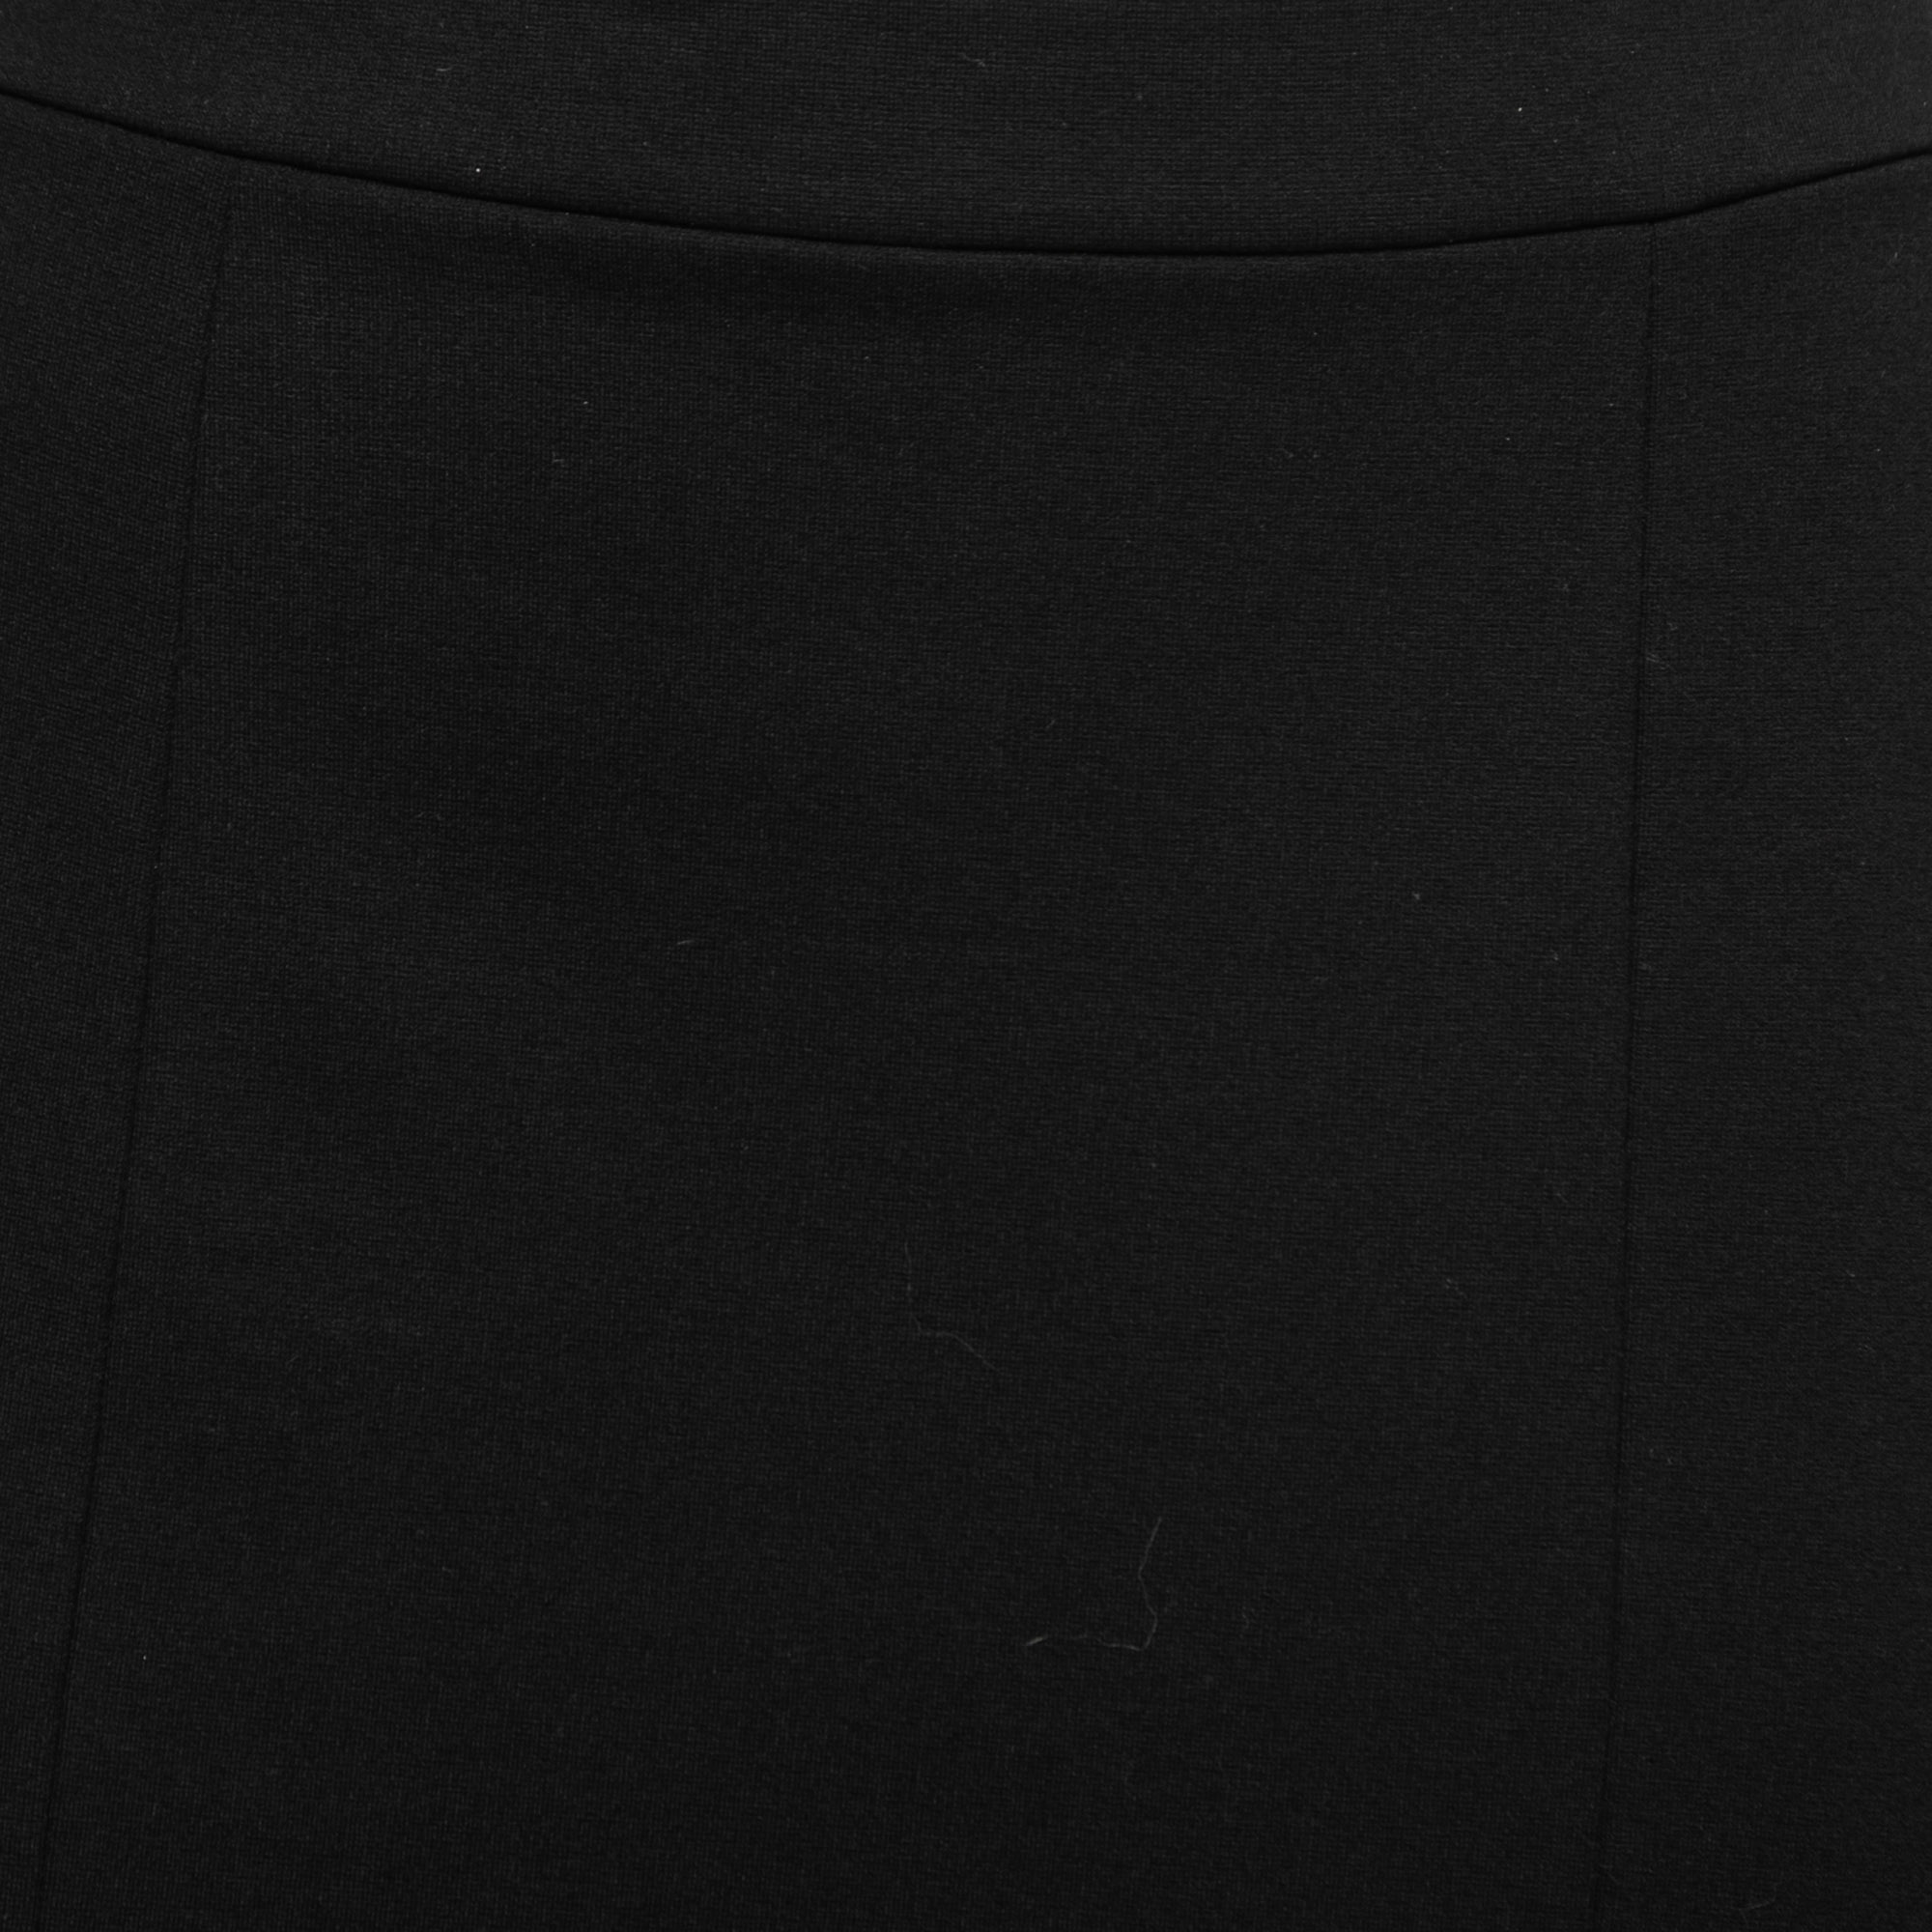 Armani Collezioni Black Stretch Knit Knee-Length Skirt L